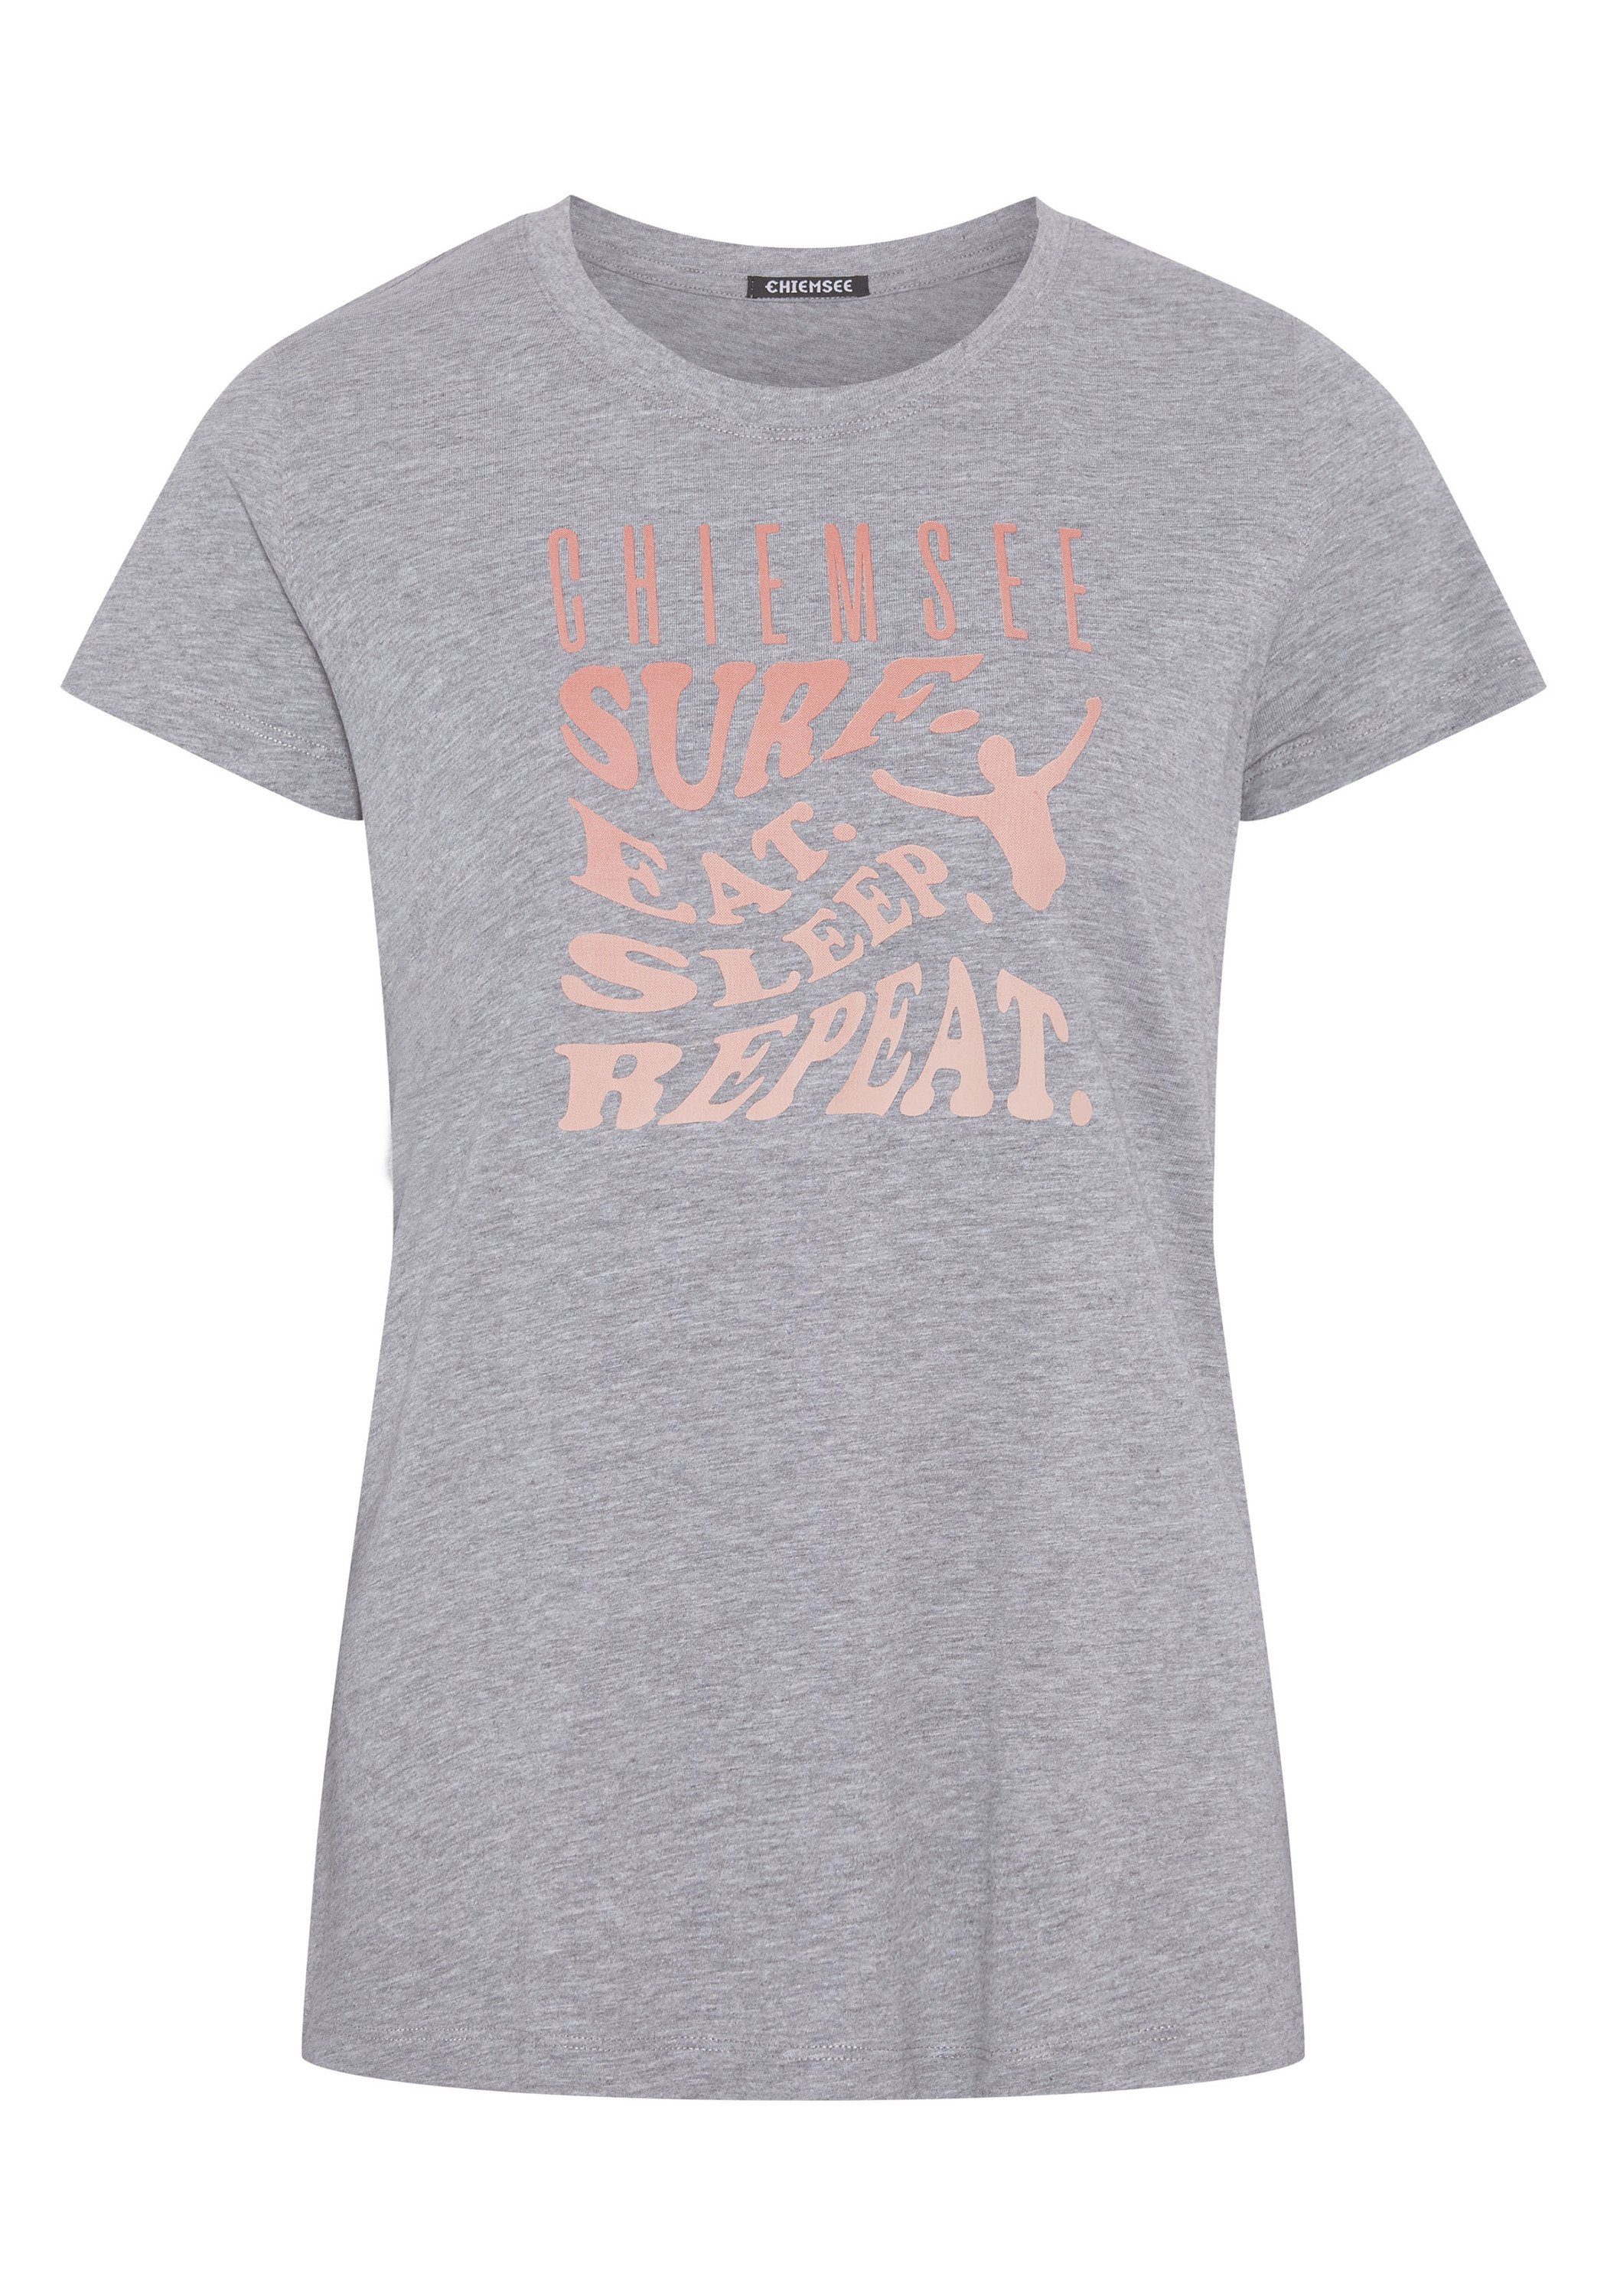 Chiemsee Print-Shirt T-Shirt mit Schriftzug 1 17-4402M Neutral Gray Melange